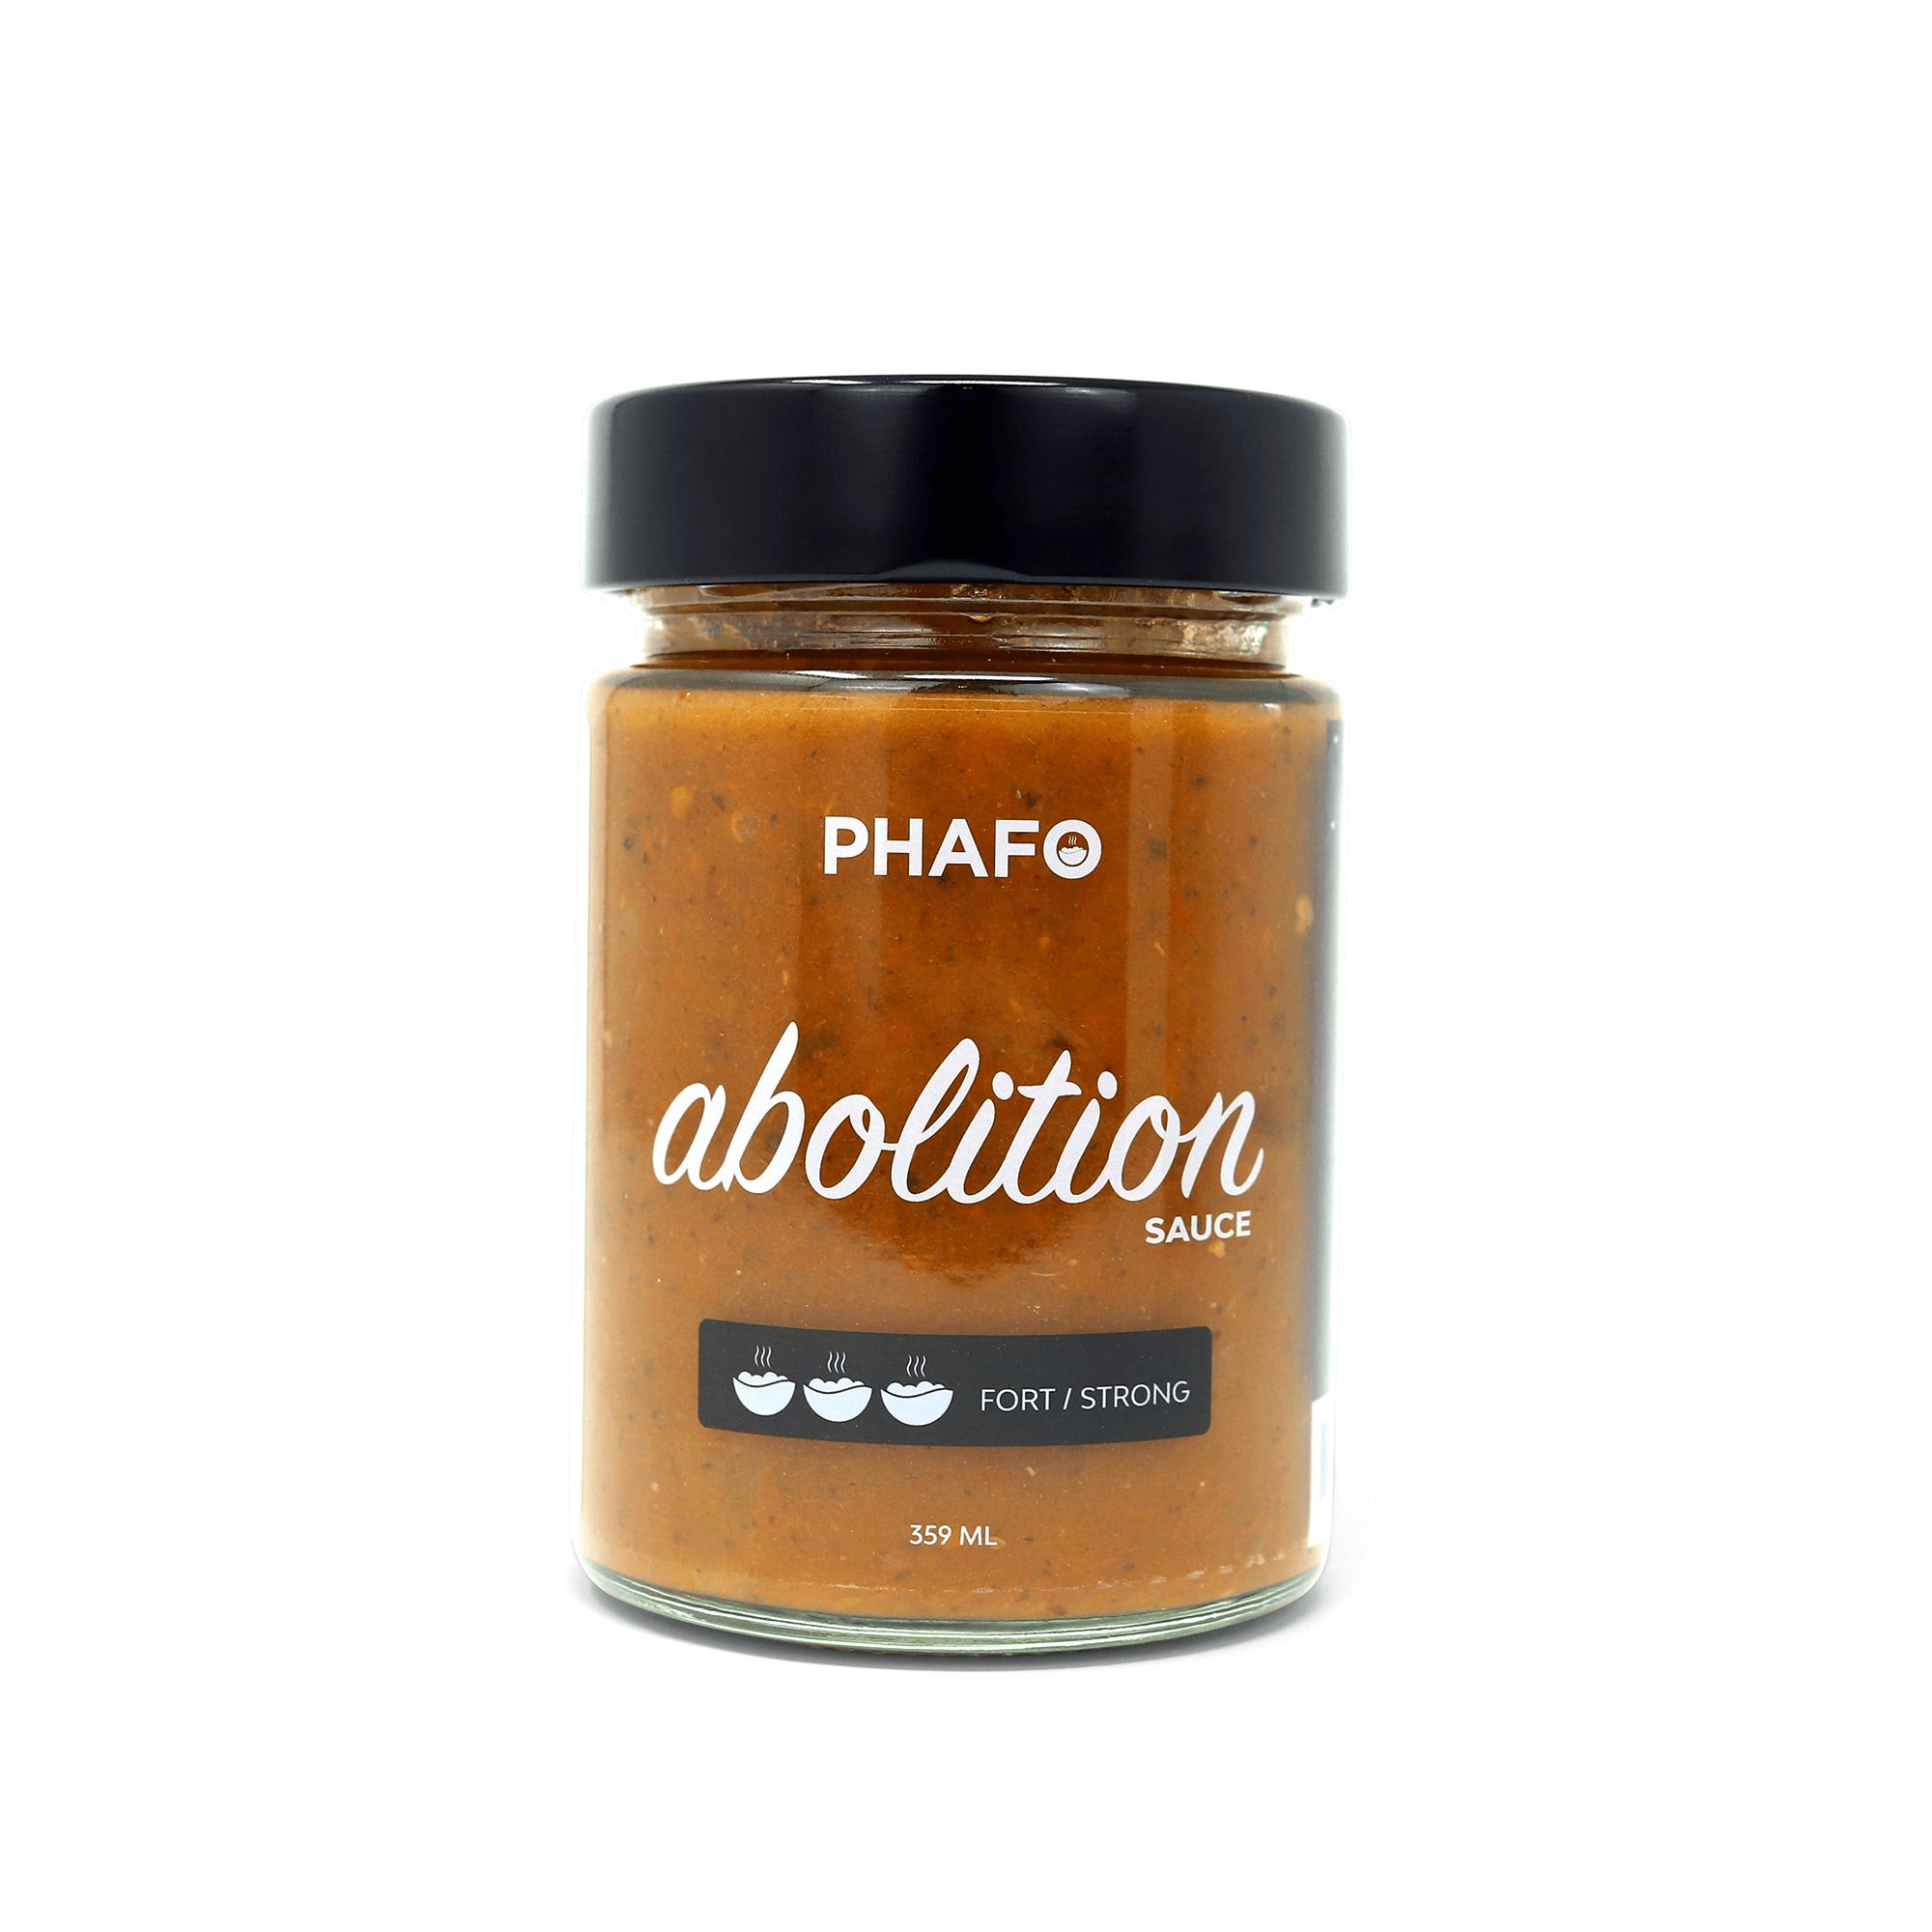 Phafo - Abolition Sauce Piquante 359ml